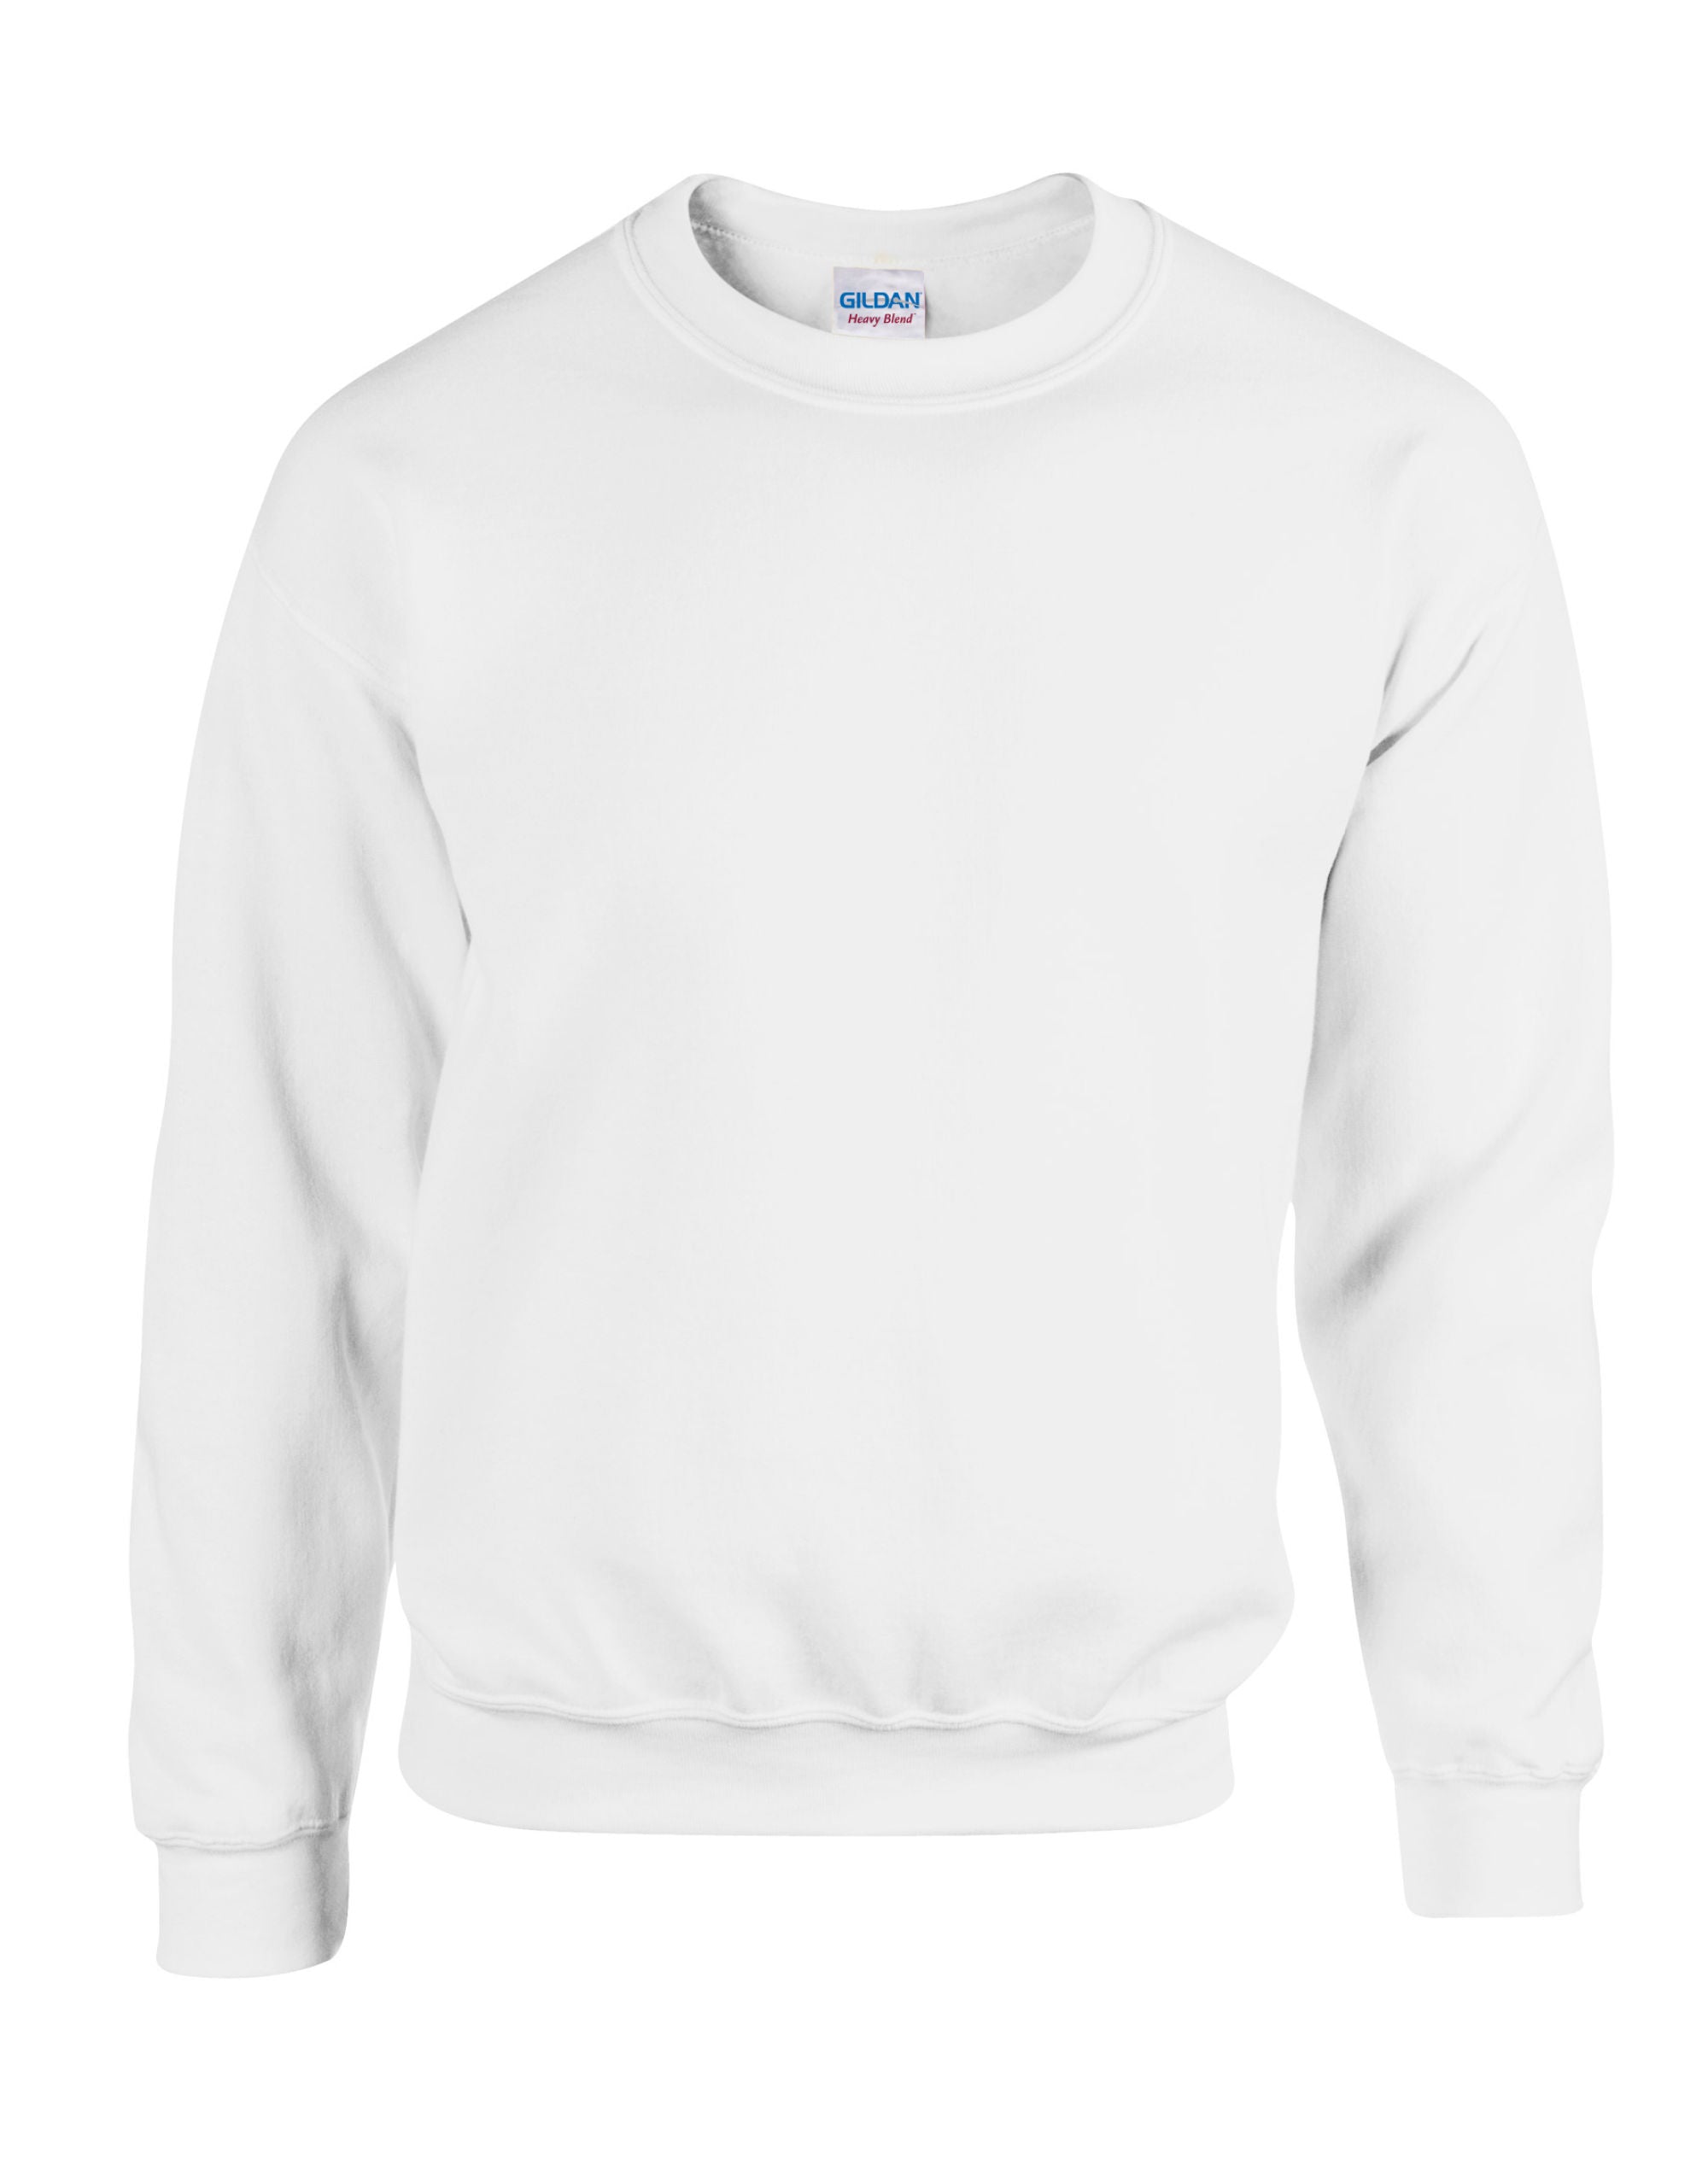 3 x Sweatshirts with Embroidered LOGO